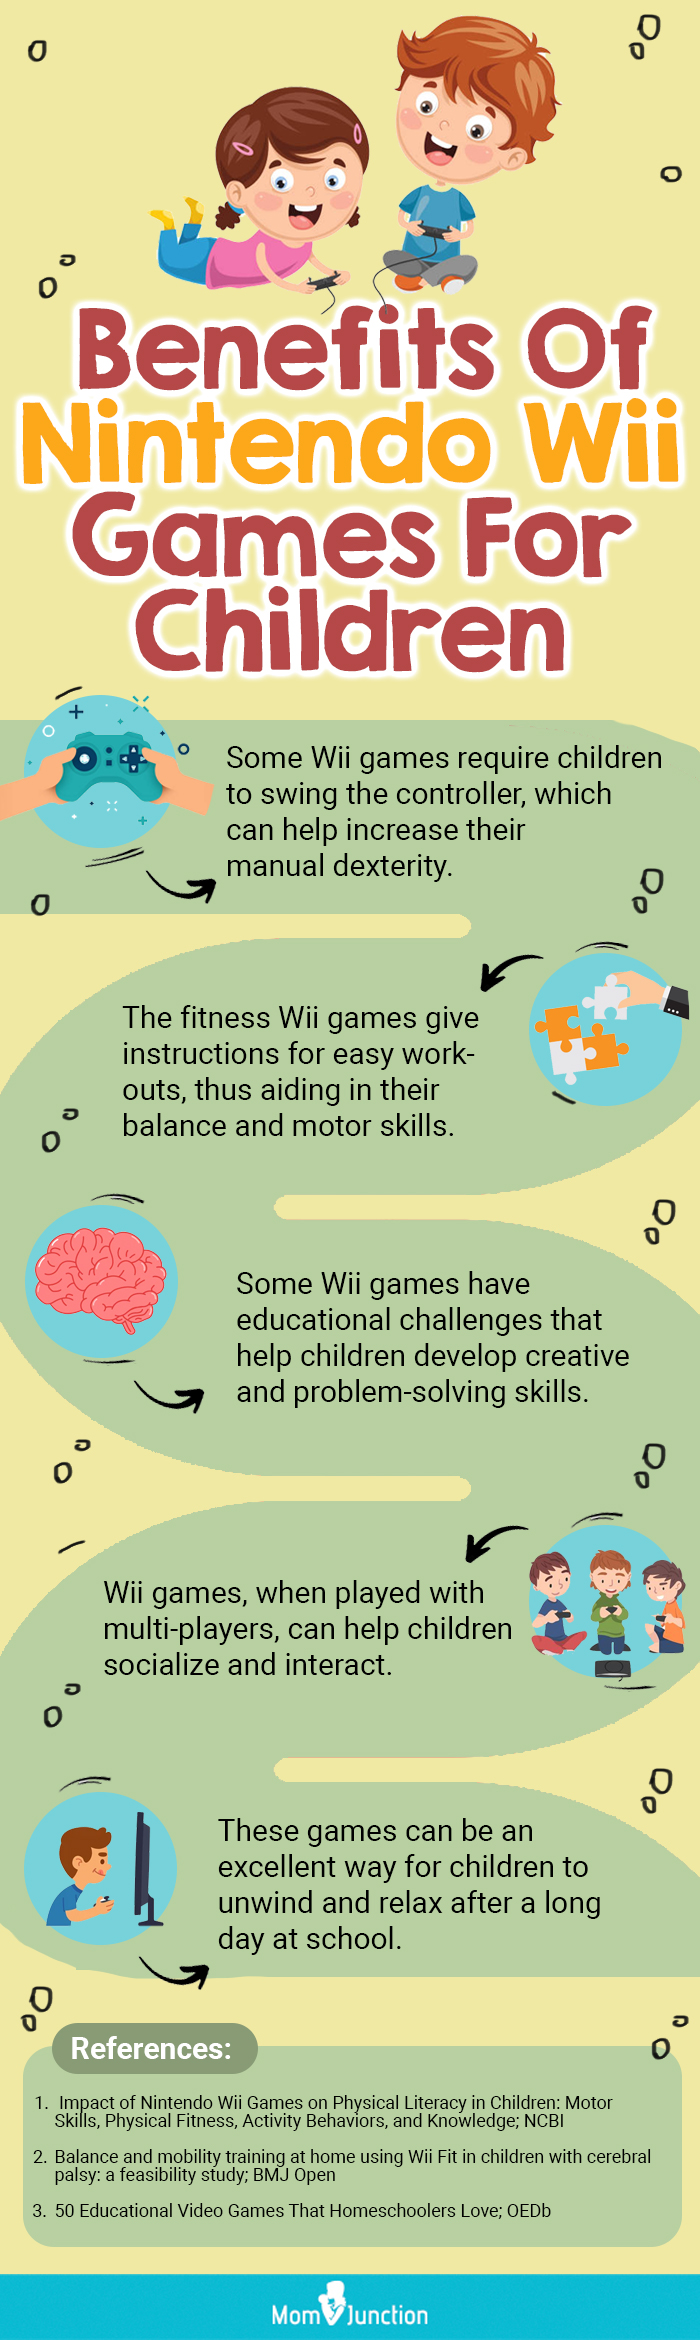 Benefits Of Nintendo Wii Games For Children (infographic)